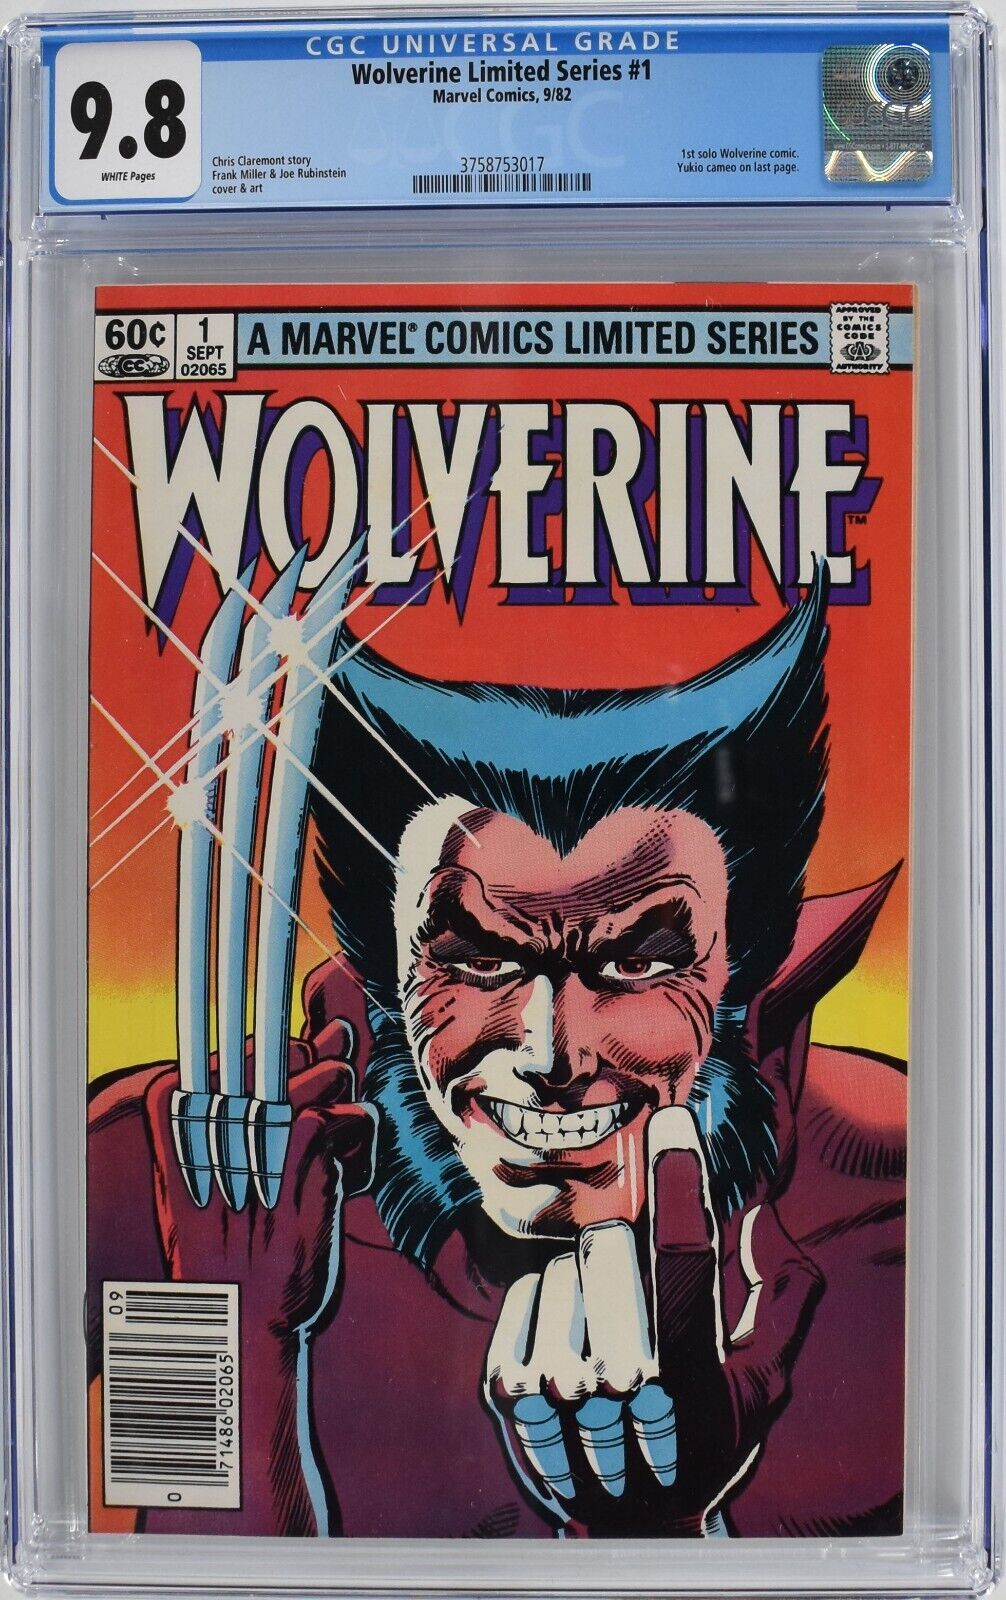 S080 Wolverine Limited Series 1 CGC 98 NMMT 1982 Newsstand1st solo Wolverine